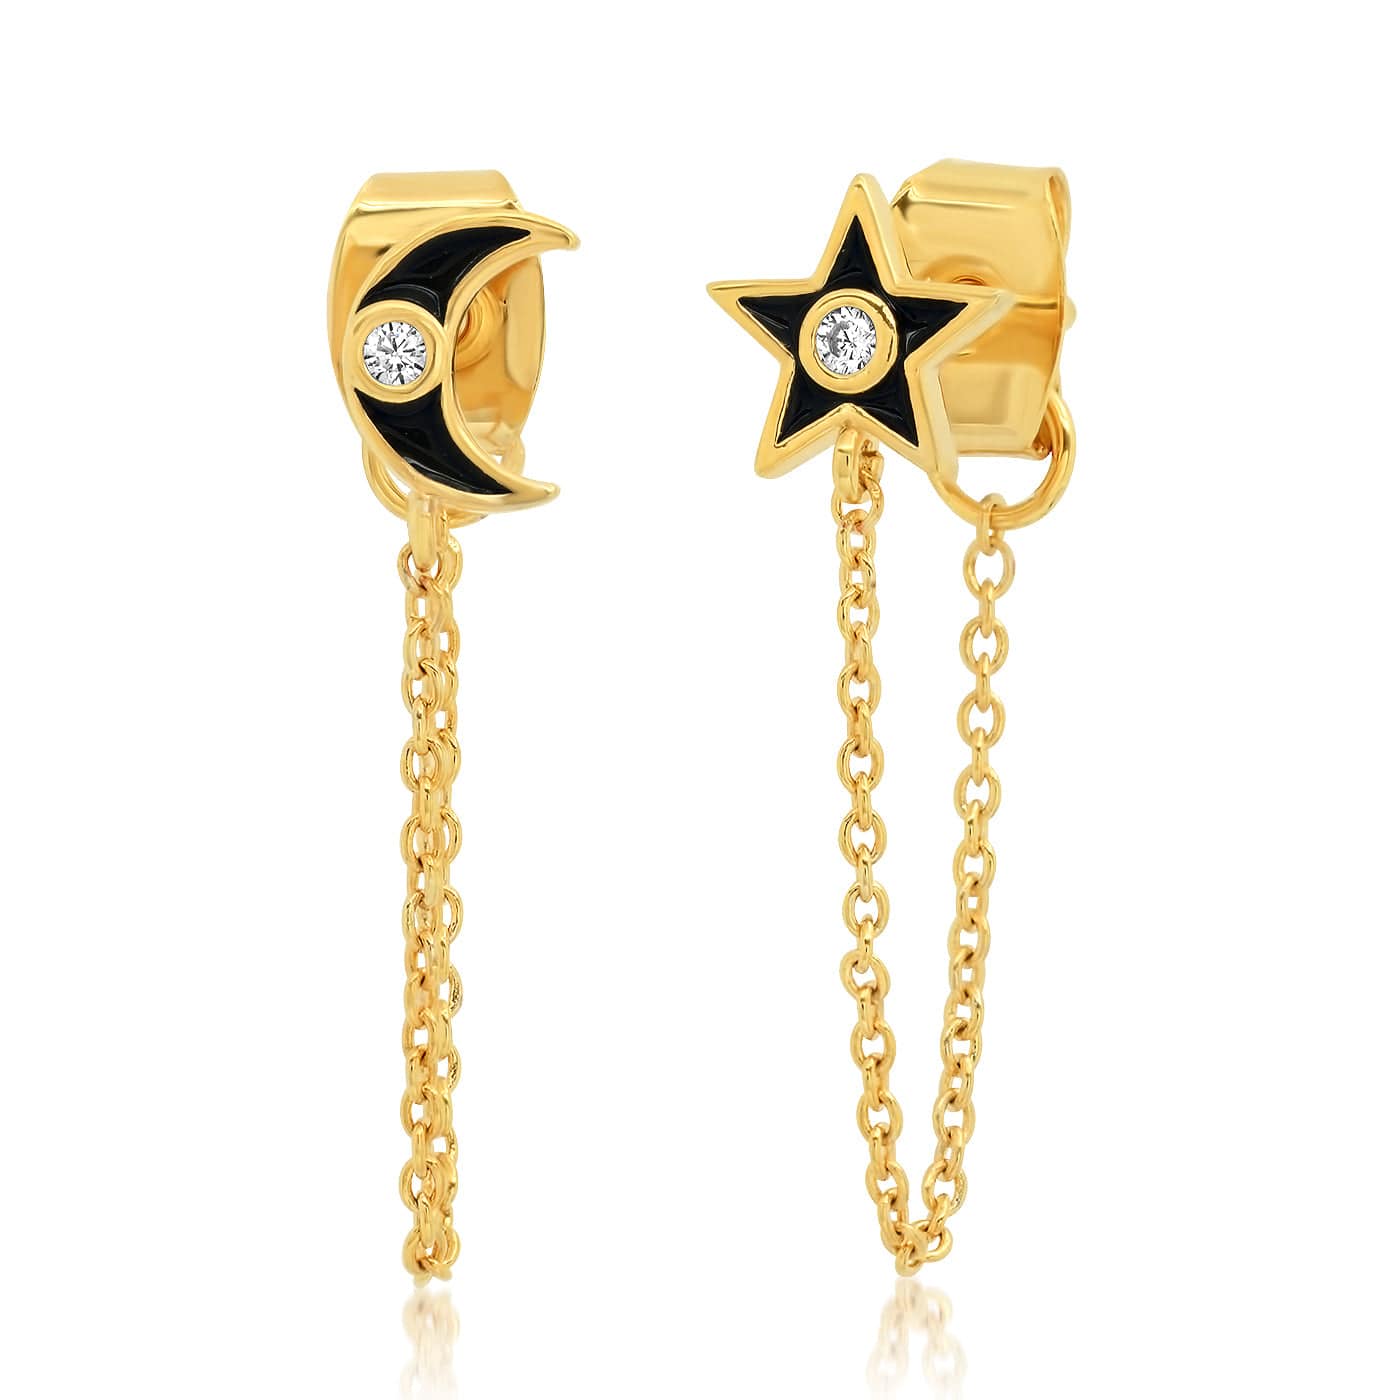 TAI JEWELRY Earrings Black Moon And Star Chain Earrings